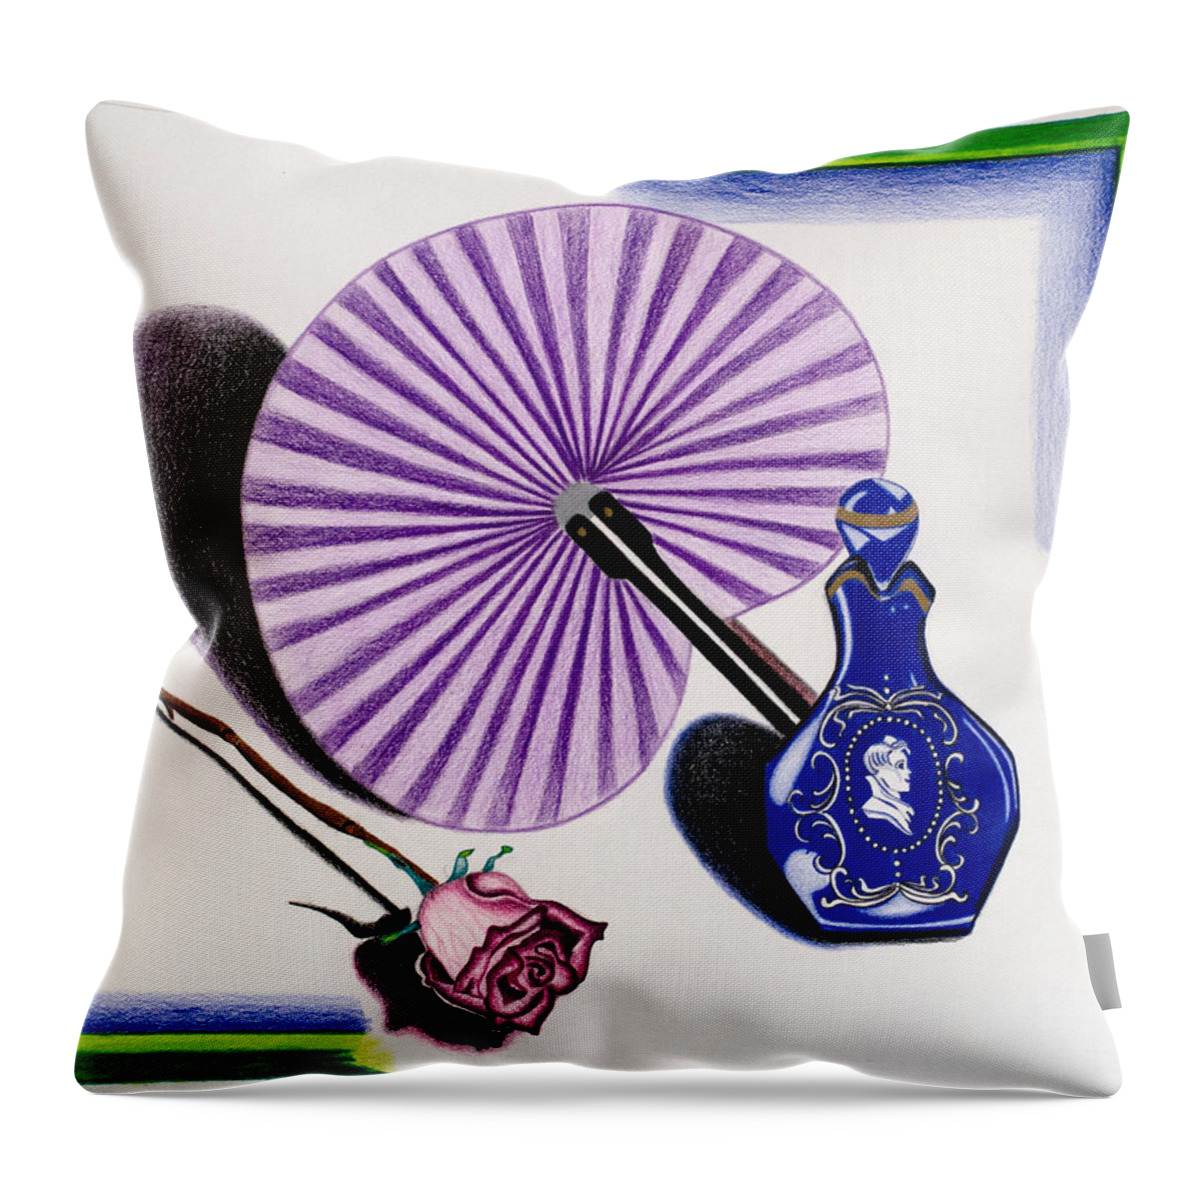 Fan Throw Pillow featuring the drawing My purple fan by Teri Schuster